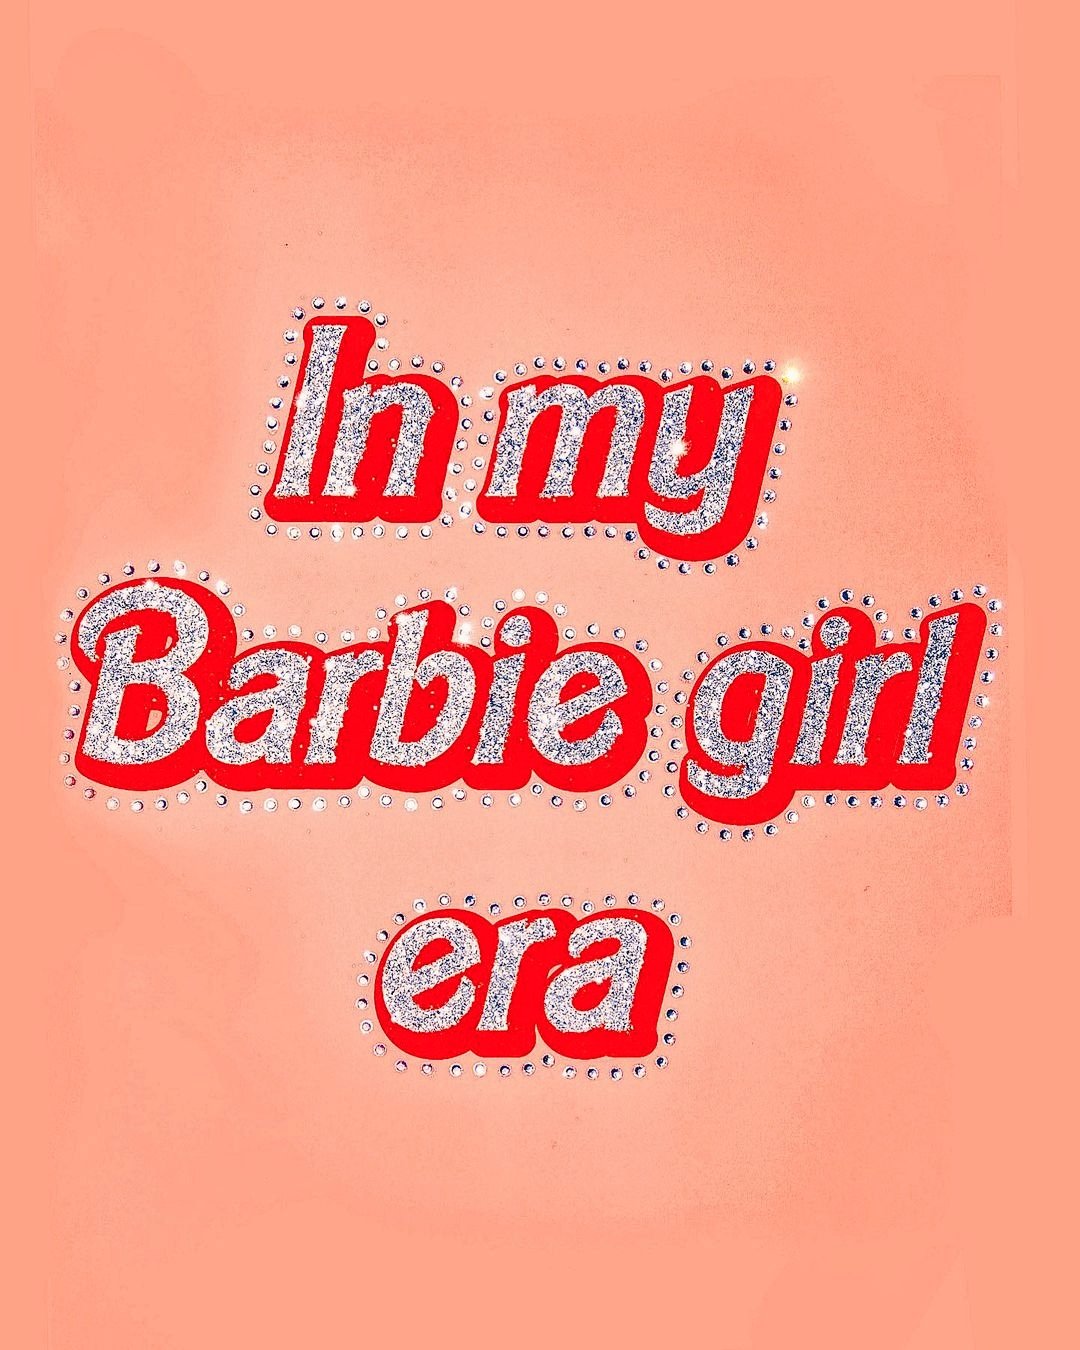 Barbie Wallpaper For Facebook